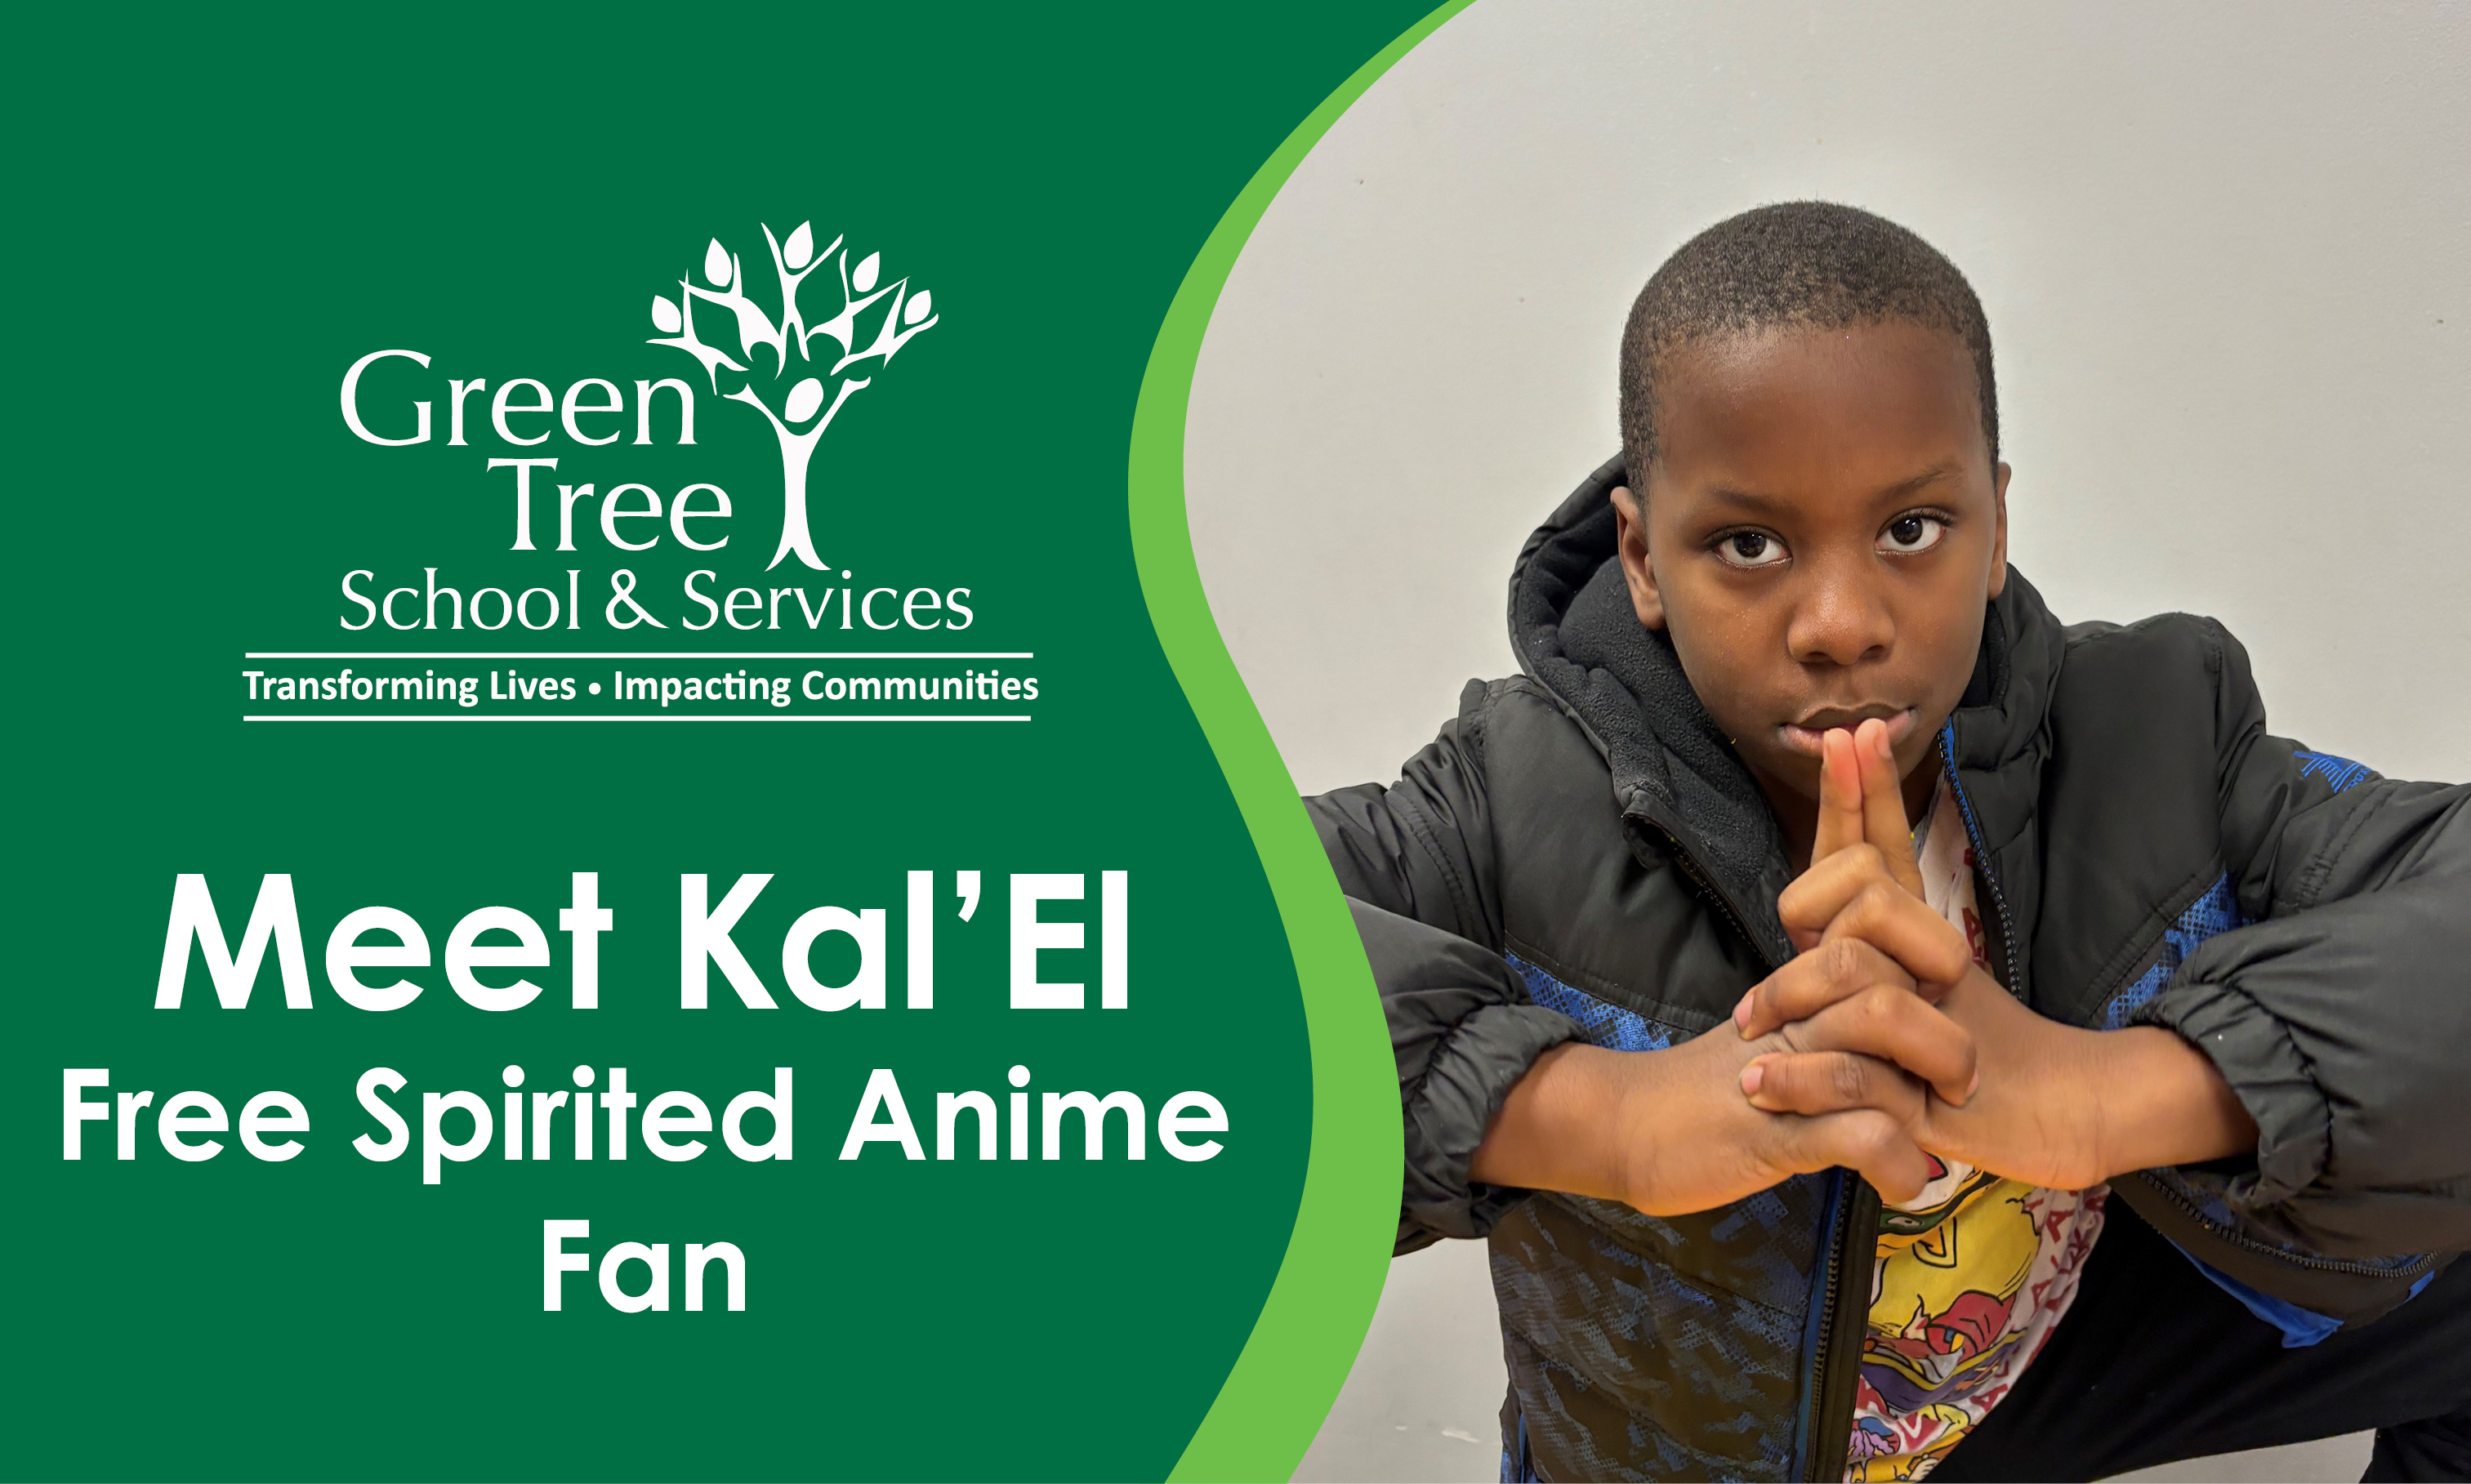 Meet Kal'El: Free Spirited Anime Fan